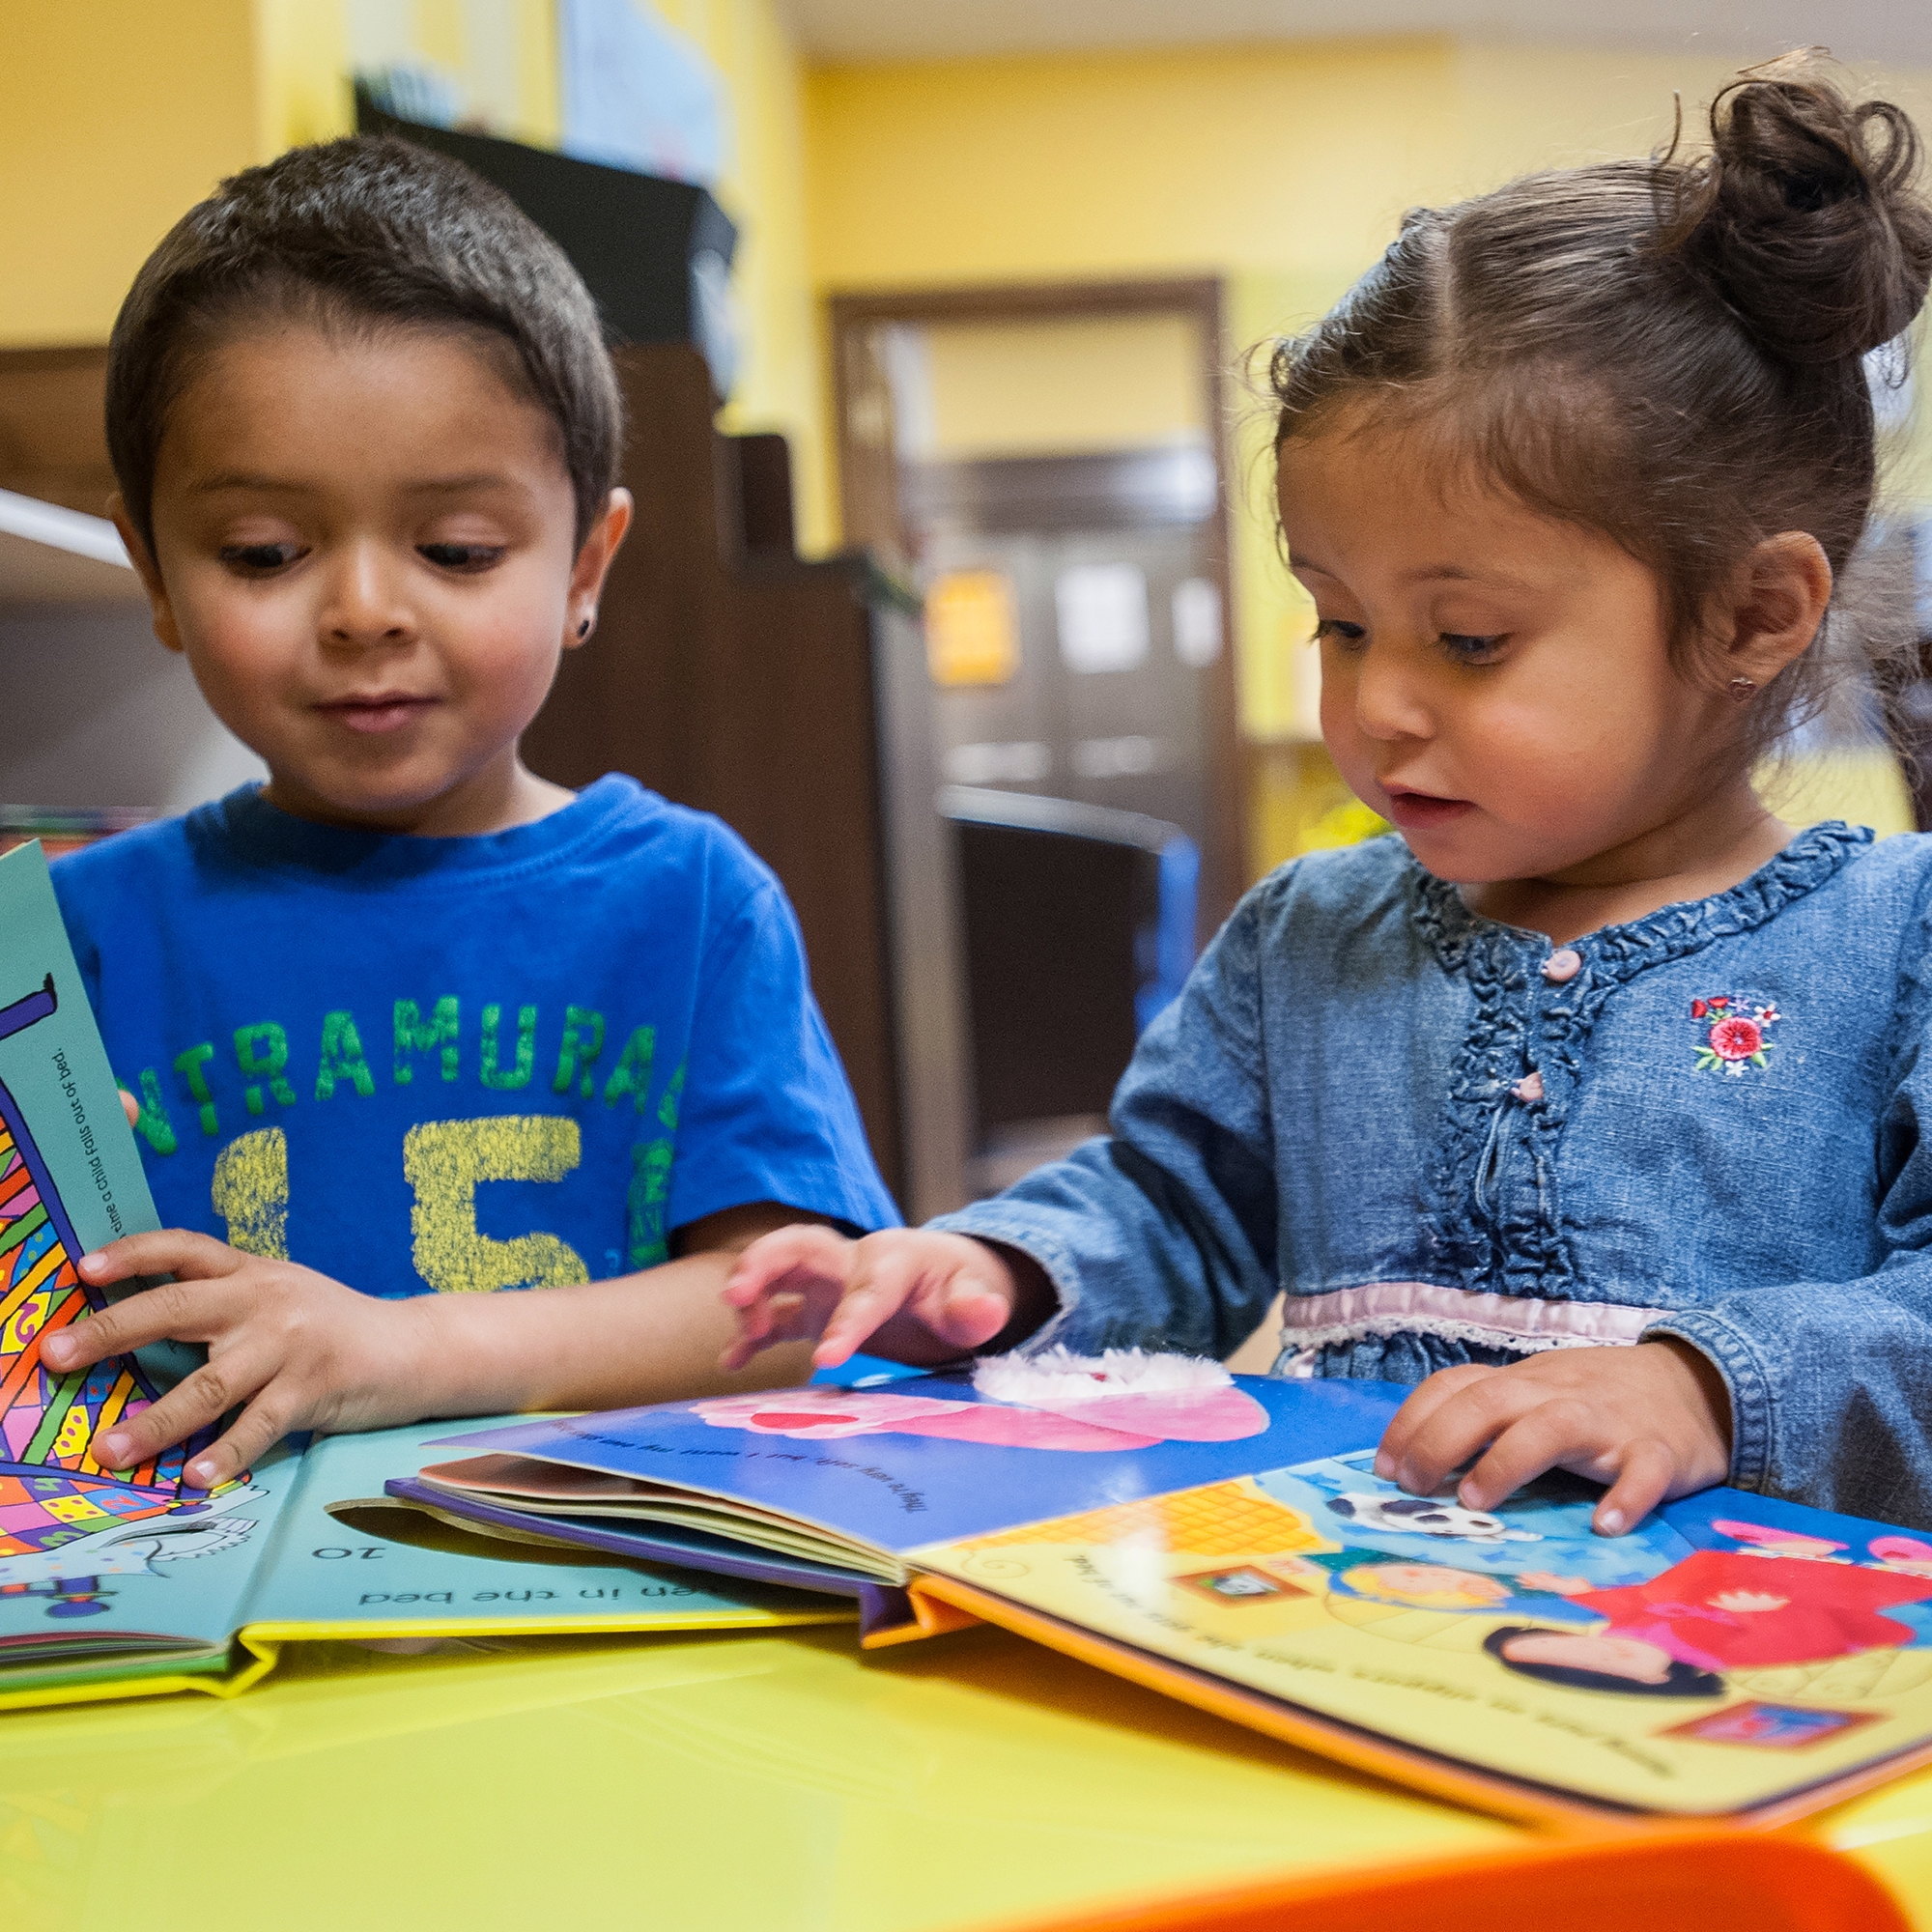 Two children read books inside a classroom